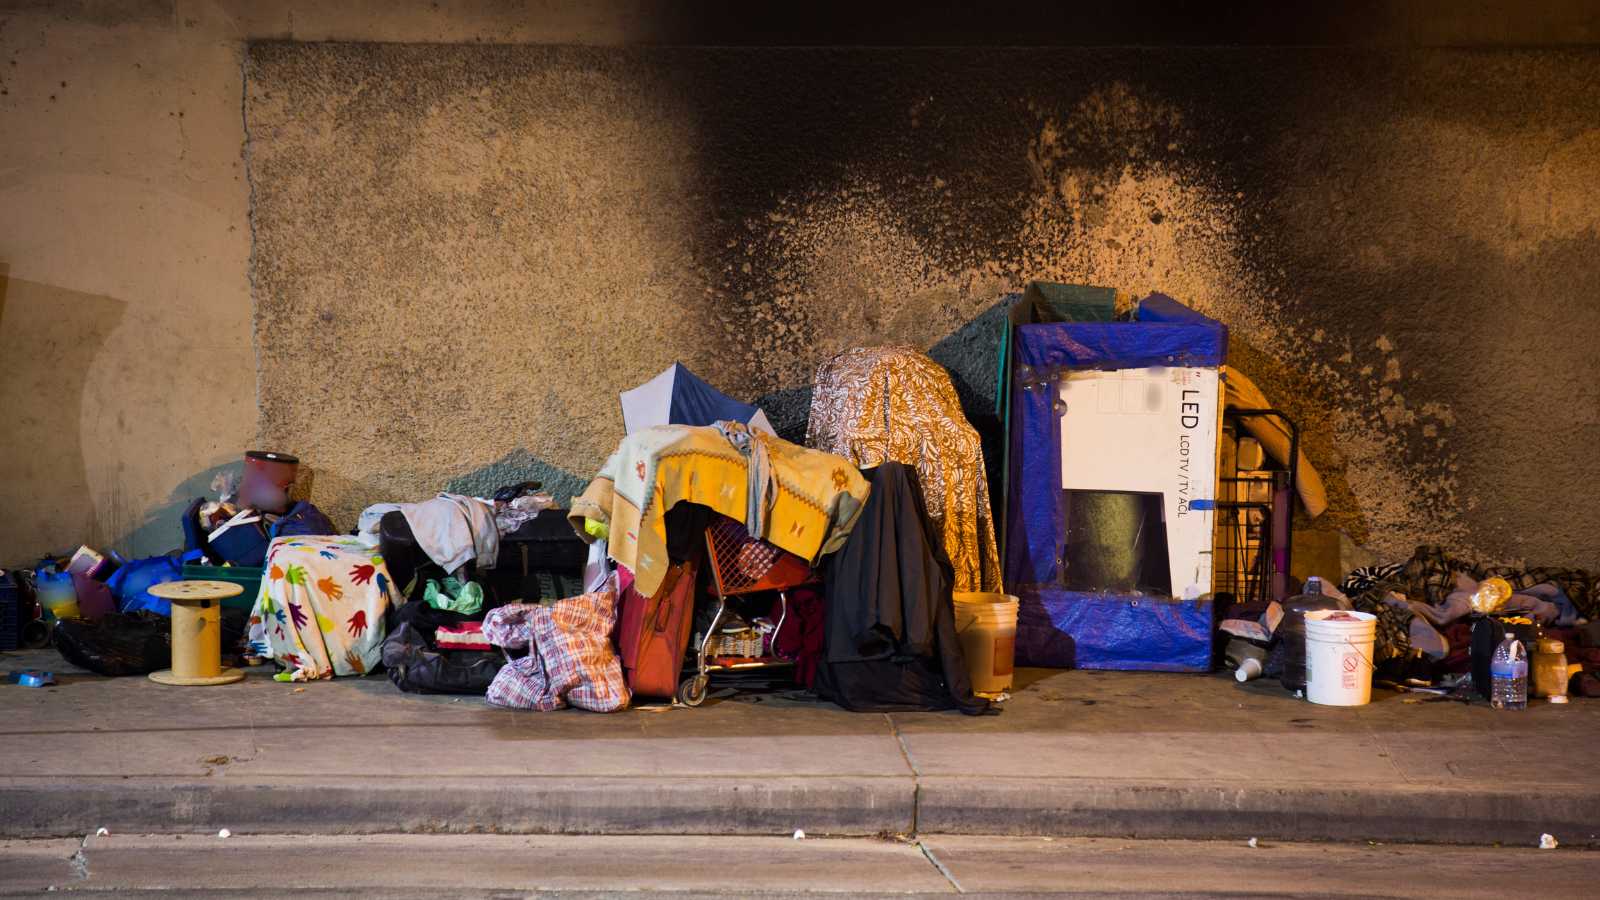 Homelessness in America